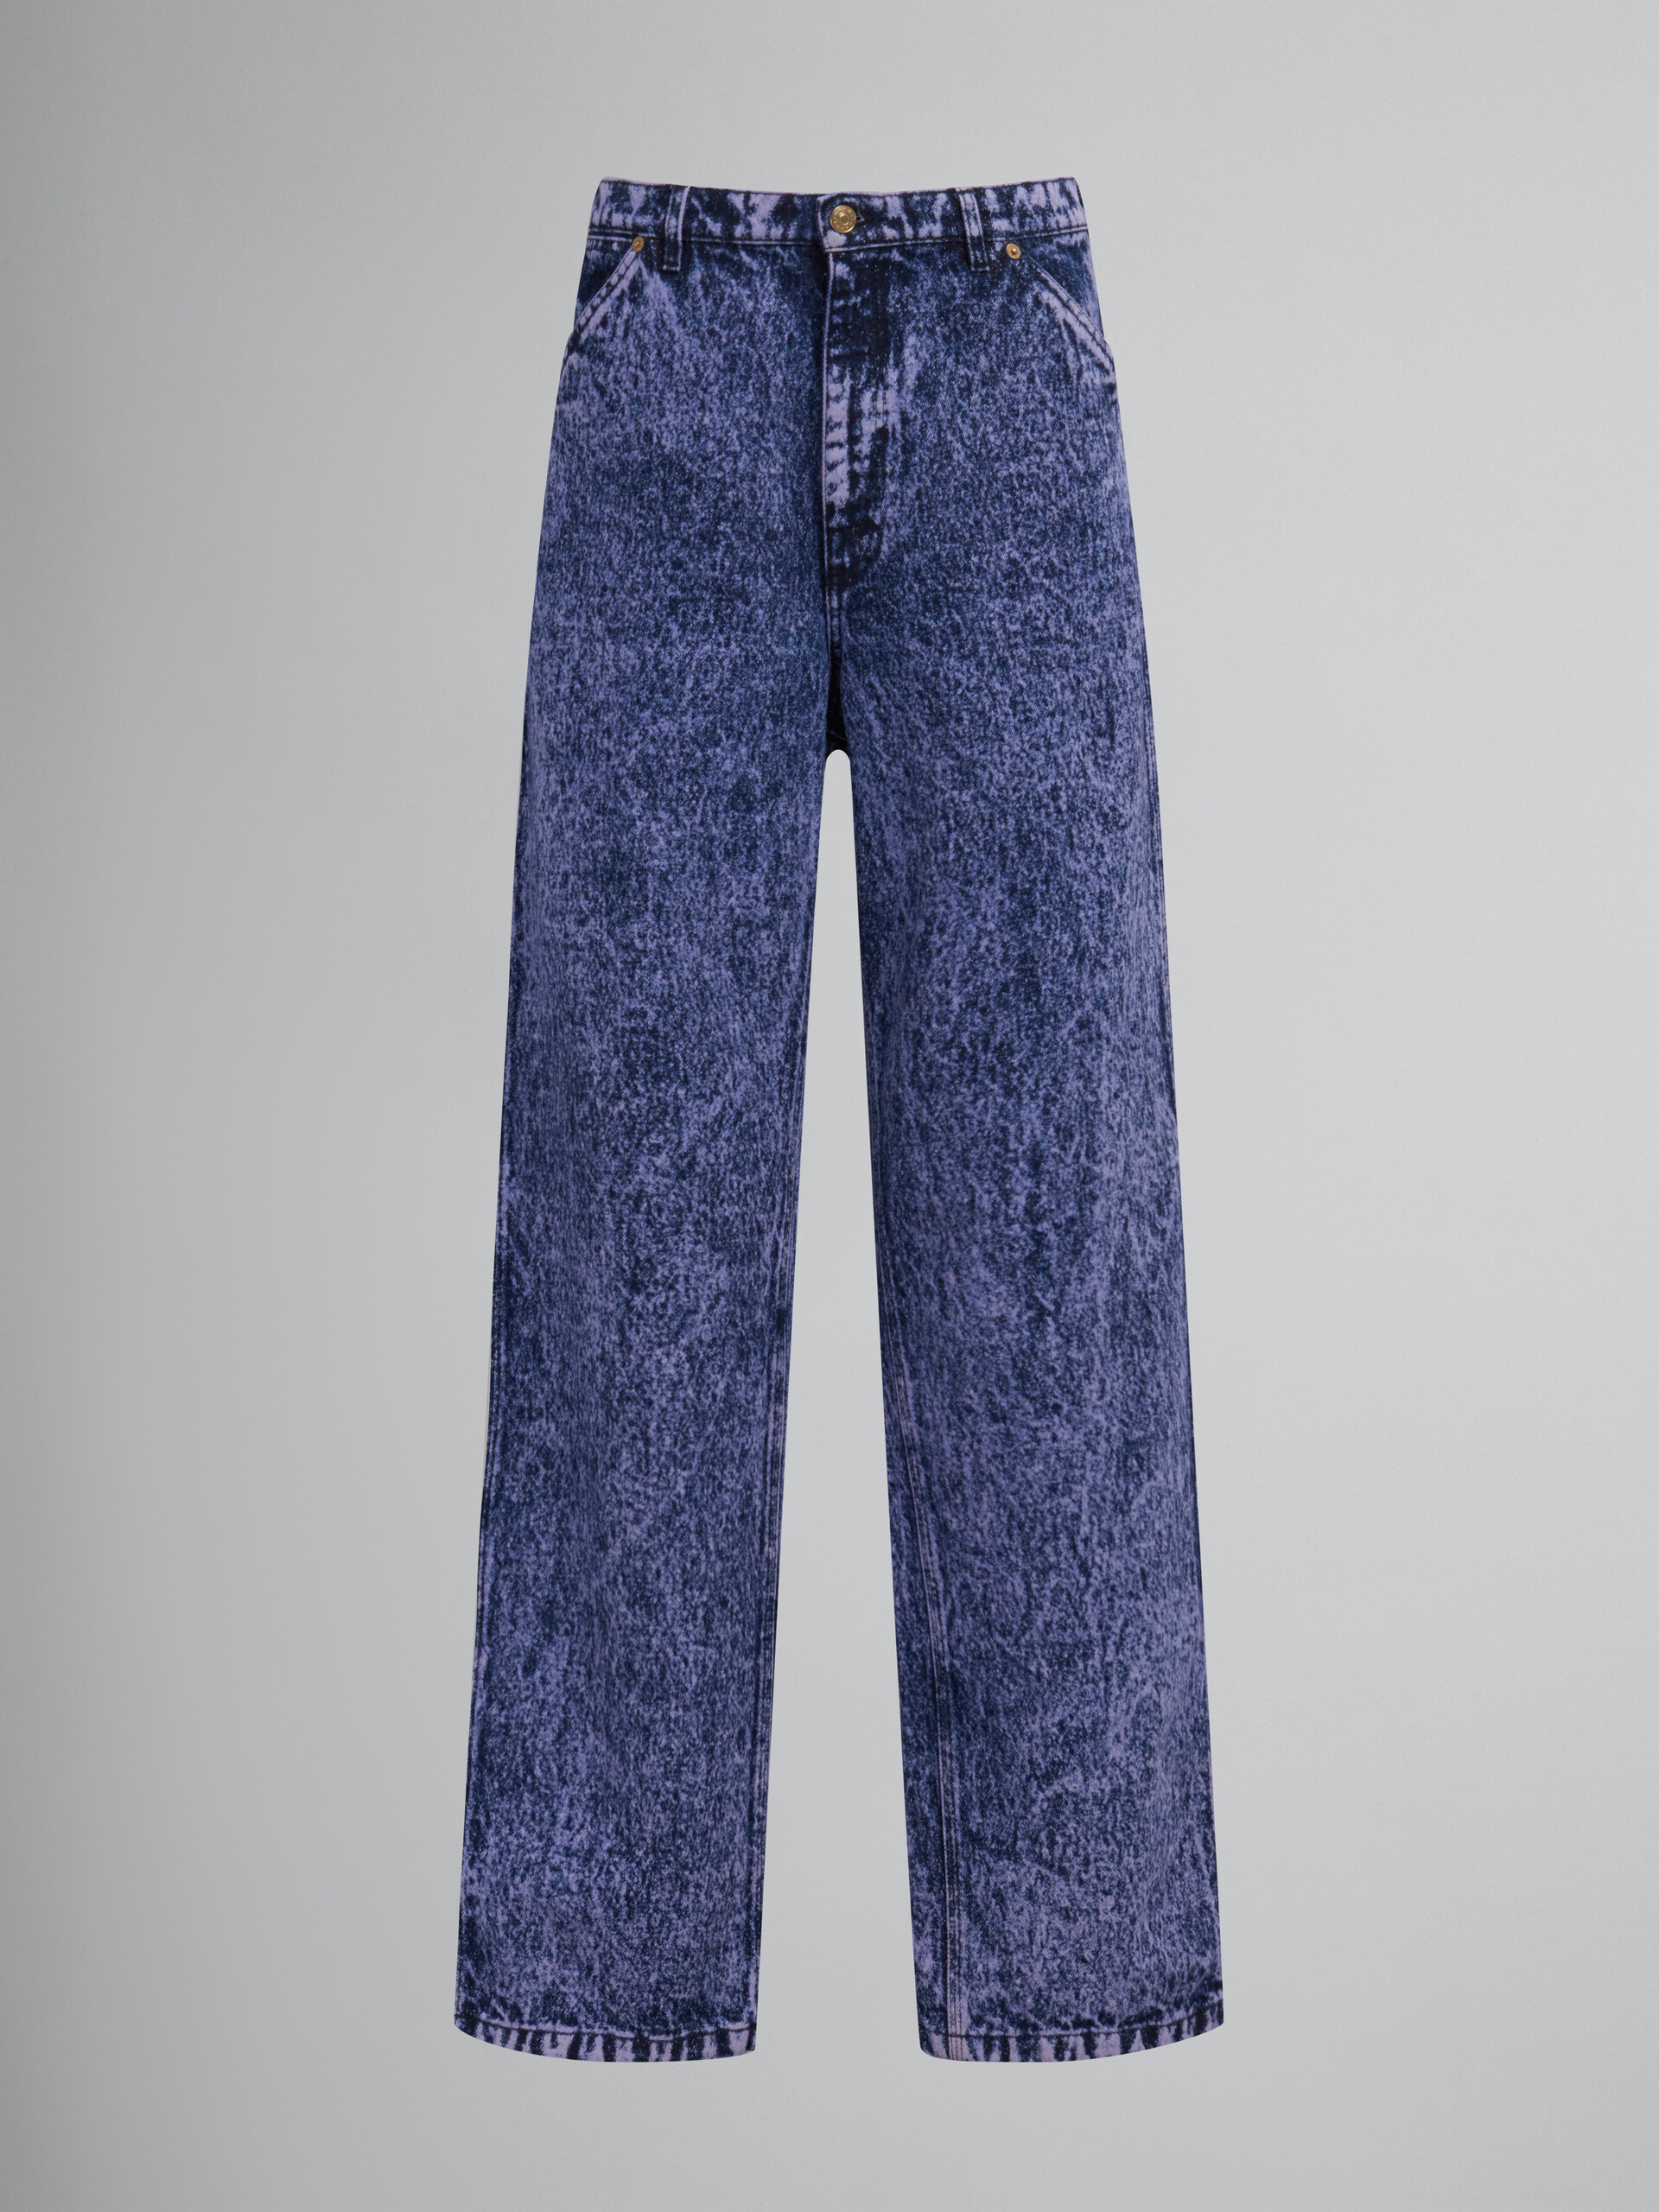 Baue Denim-Jeans mit marmoriertem Finish - Hosen - Image 1